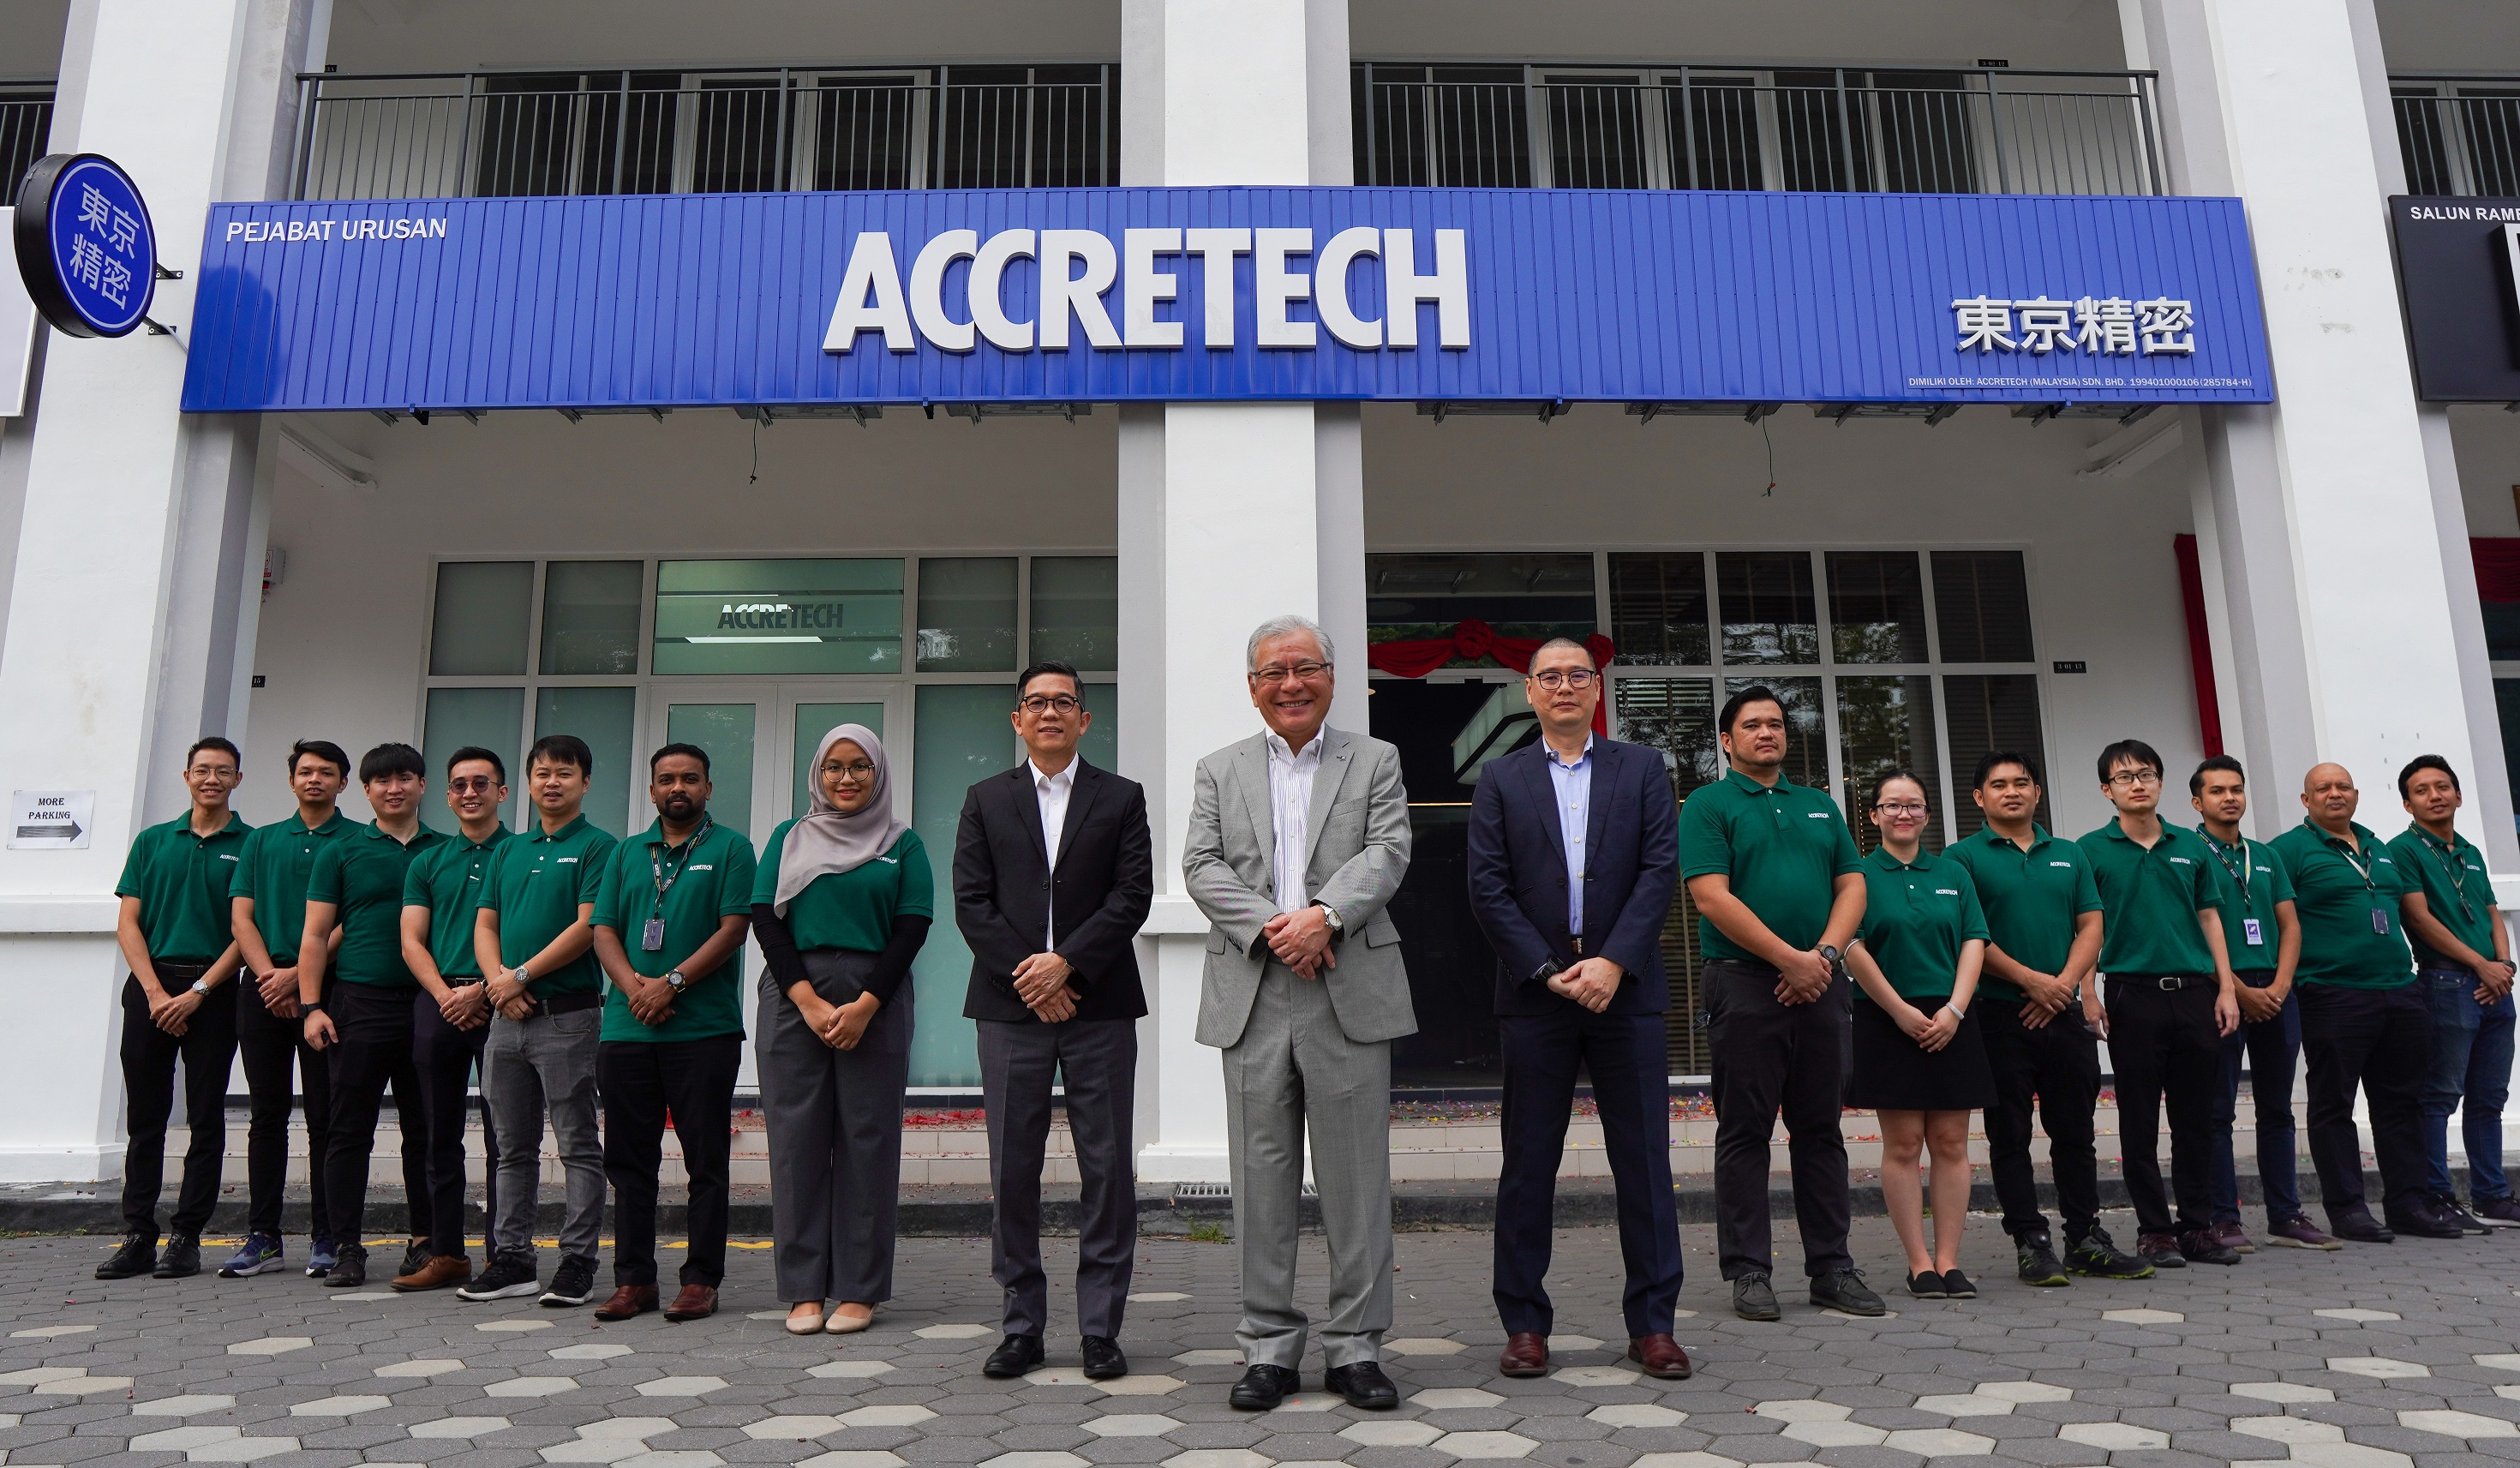 Accretech Penang Team